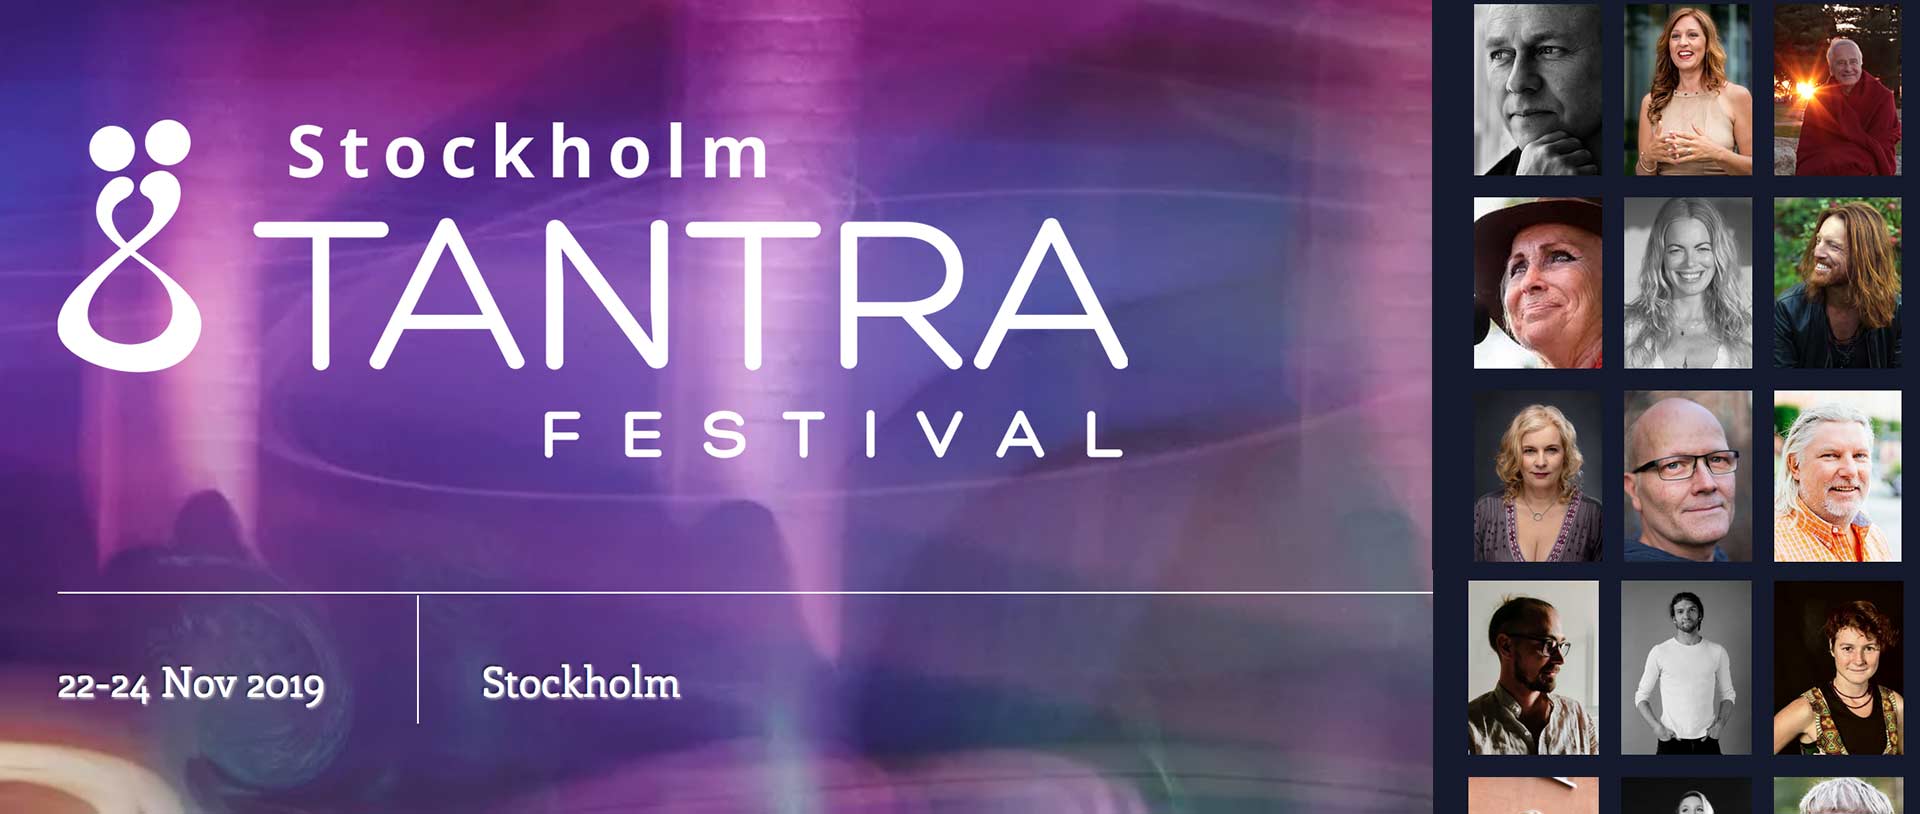 Stocholm Tantra Festival